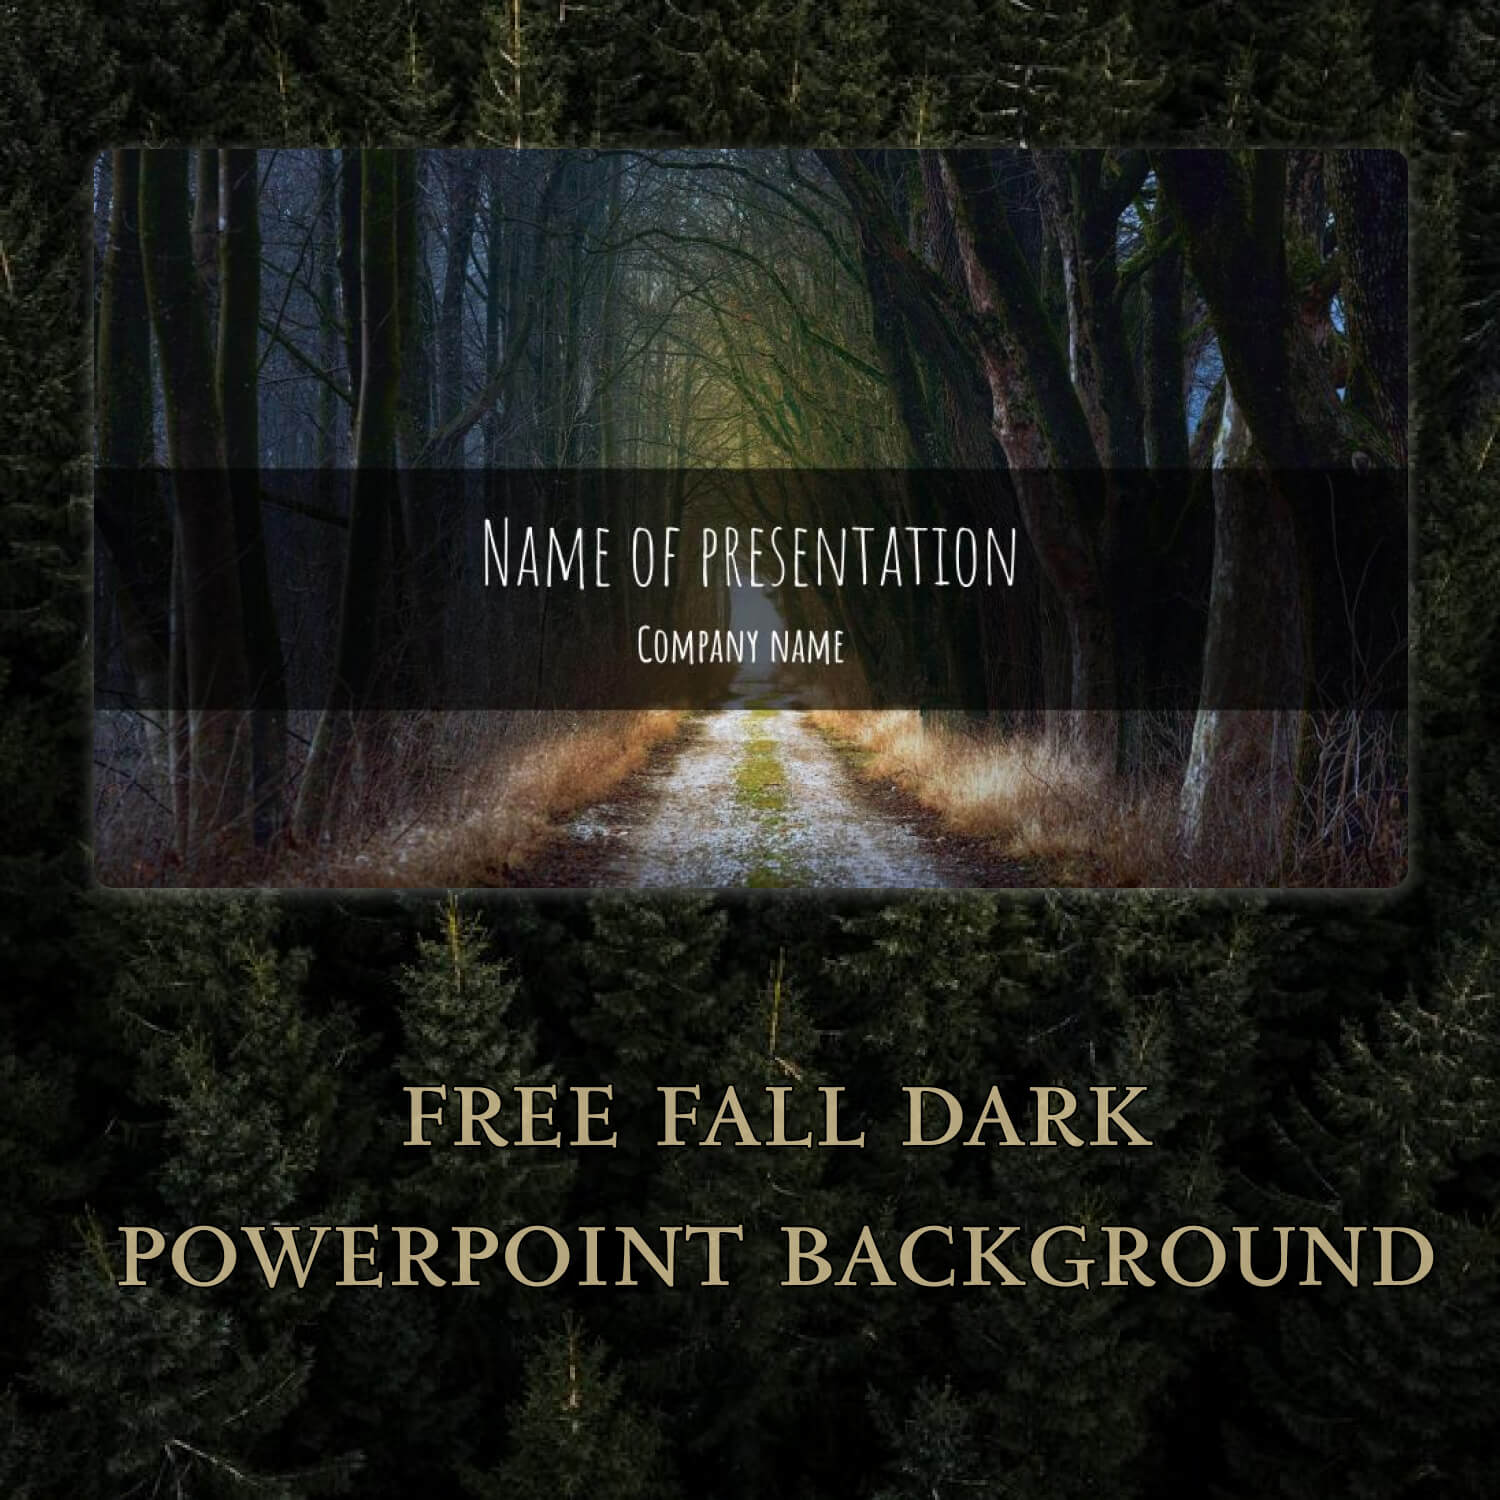 Free Fall Dark Powerpoint Background.